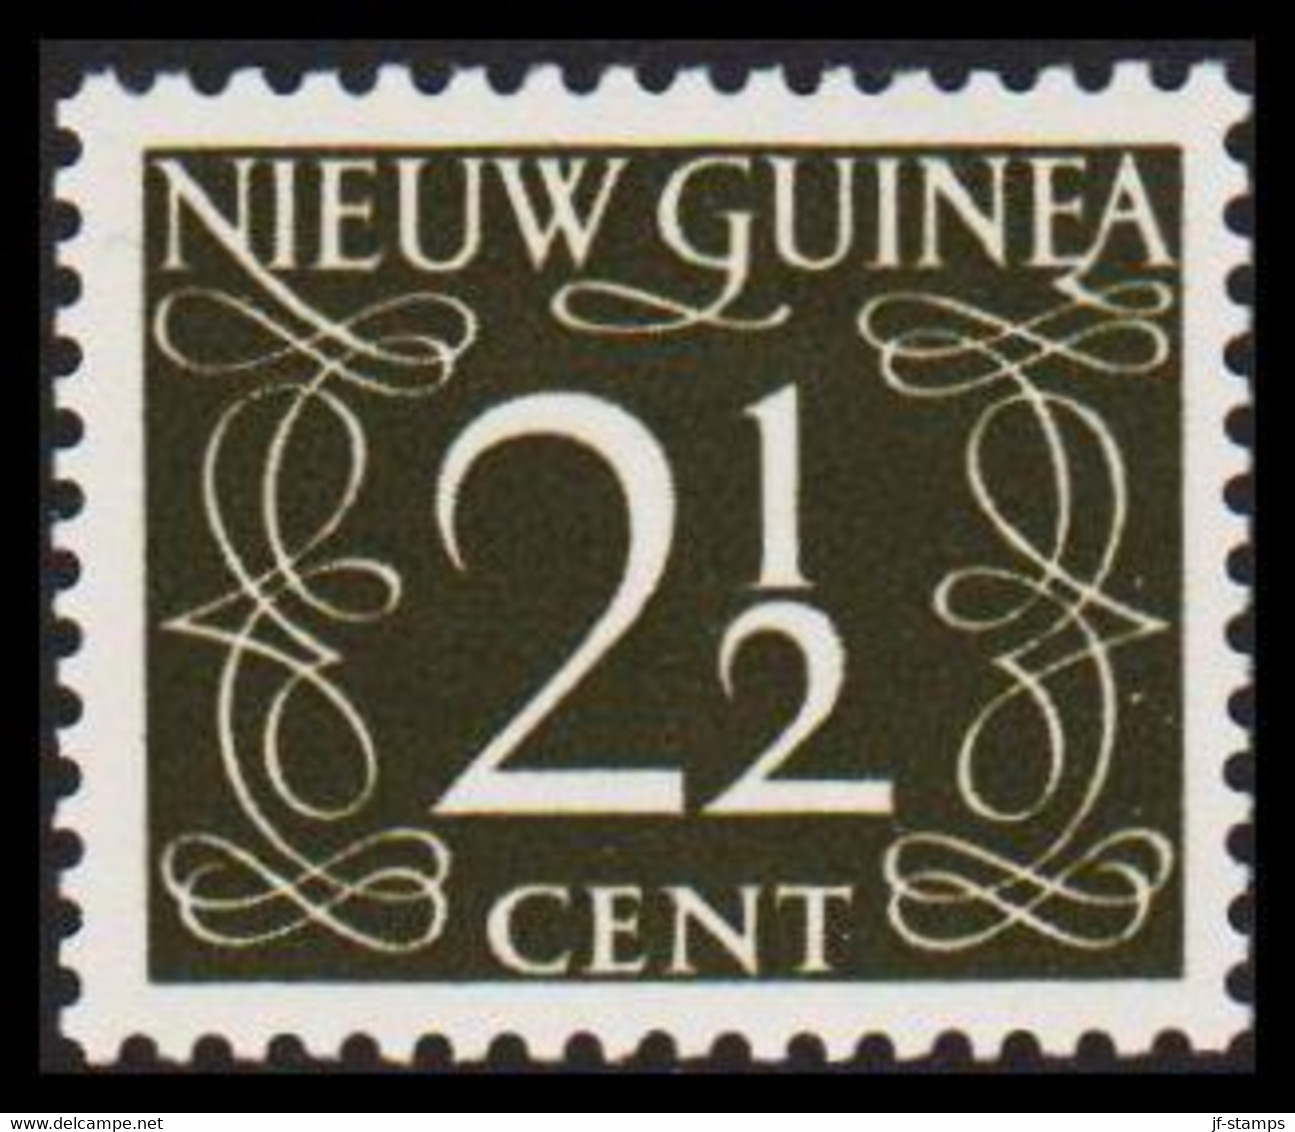 1950. NIEUW GUINEA. Nummerals- Type 2½ CENT Hinged.  - JF529320 - Nueva Guinea Holandesa